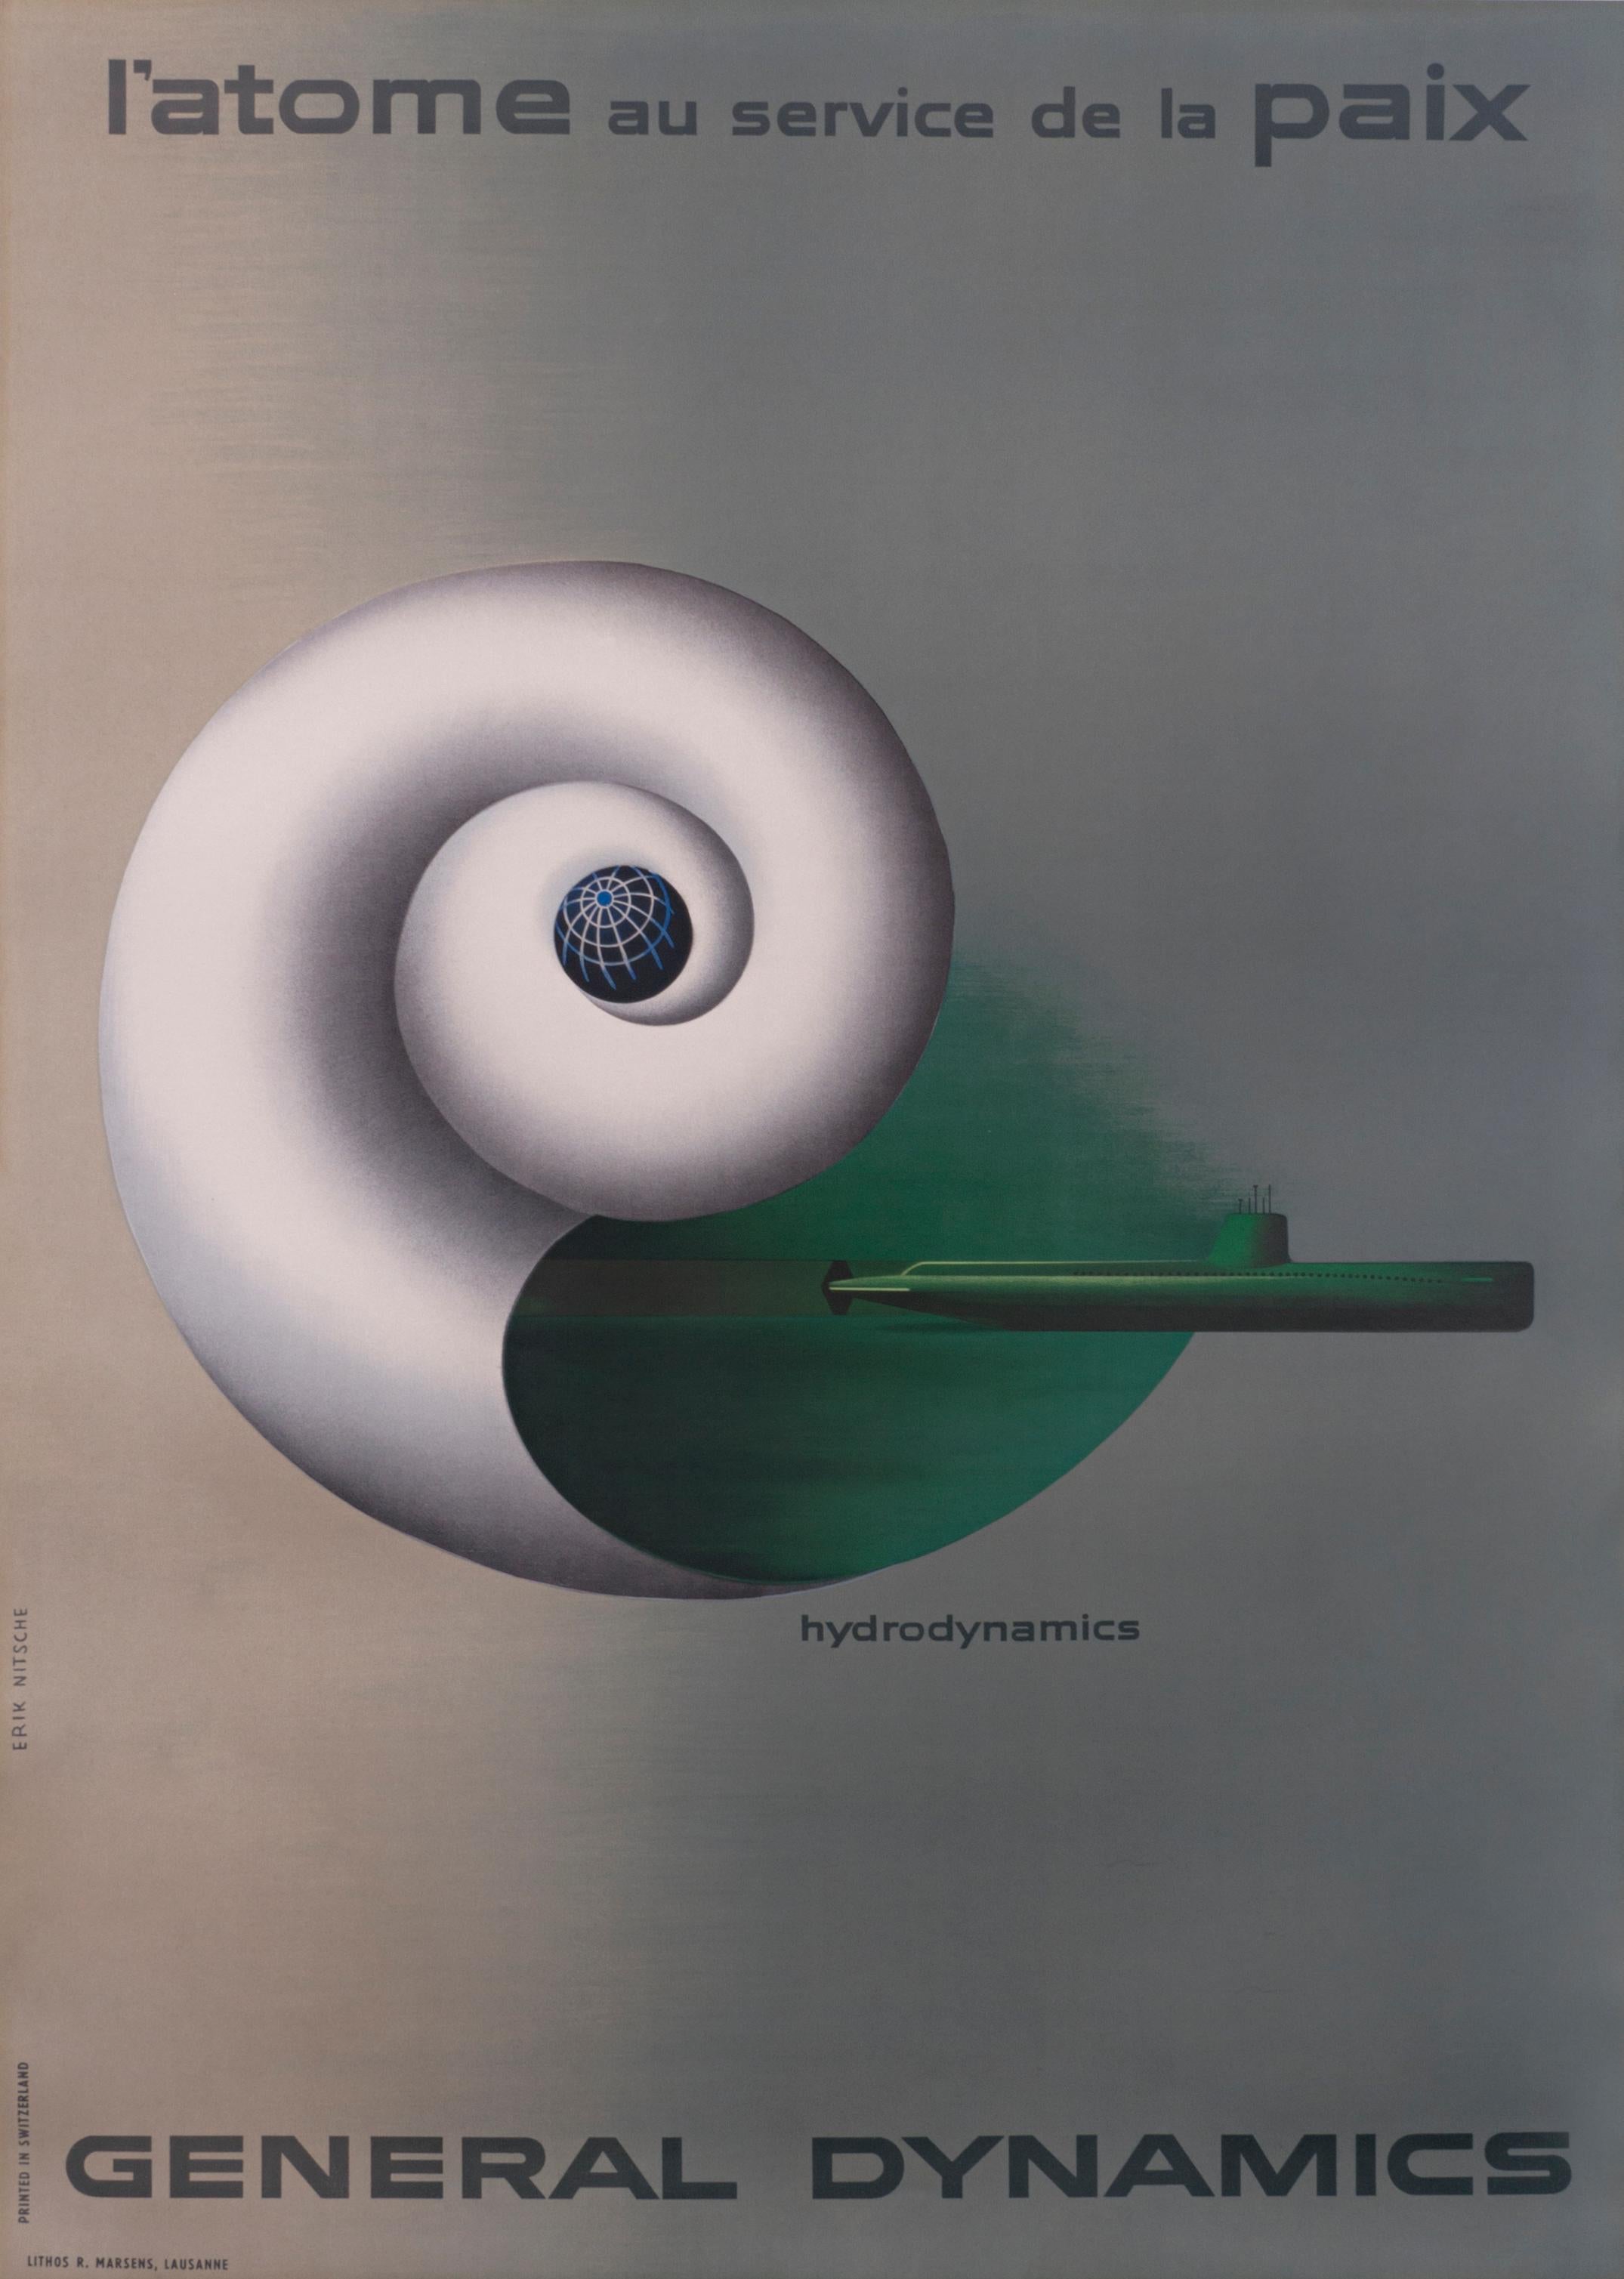 Erik Nitsche Abstract Print - "General Dynamics - Hydrodynamics (Nautilus)" Original Vintage Submarine Poster